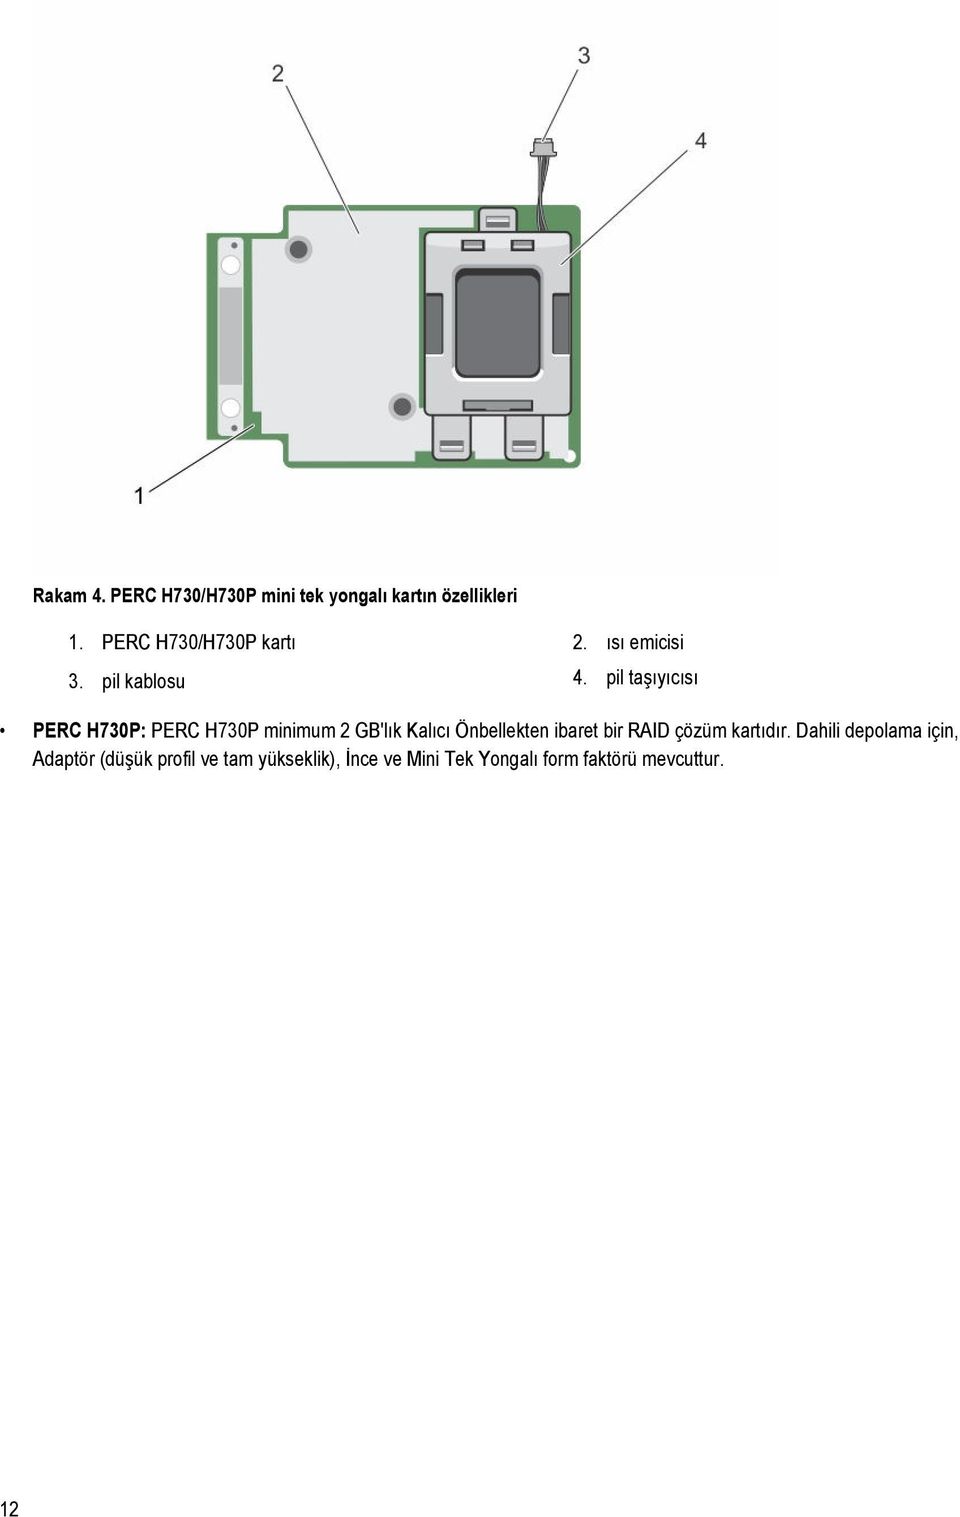 pil taşıyıcısı PERC H730P: PERC H730P minimum 2 GB'lık Kalıcı Önbellekten ibaret bir